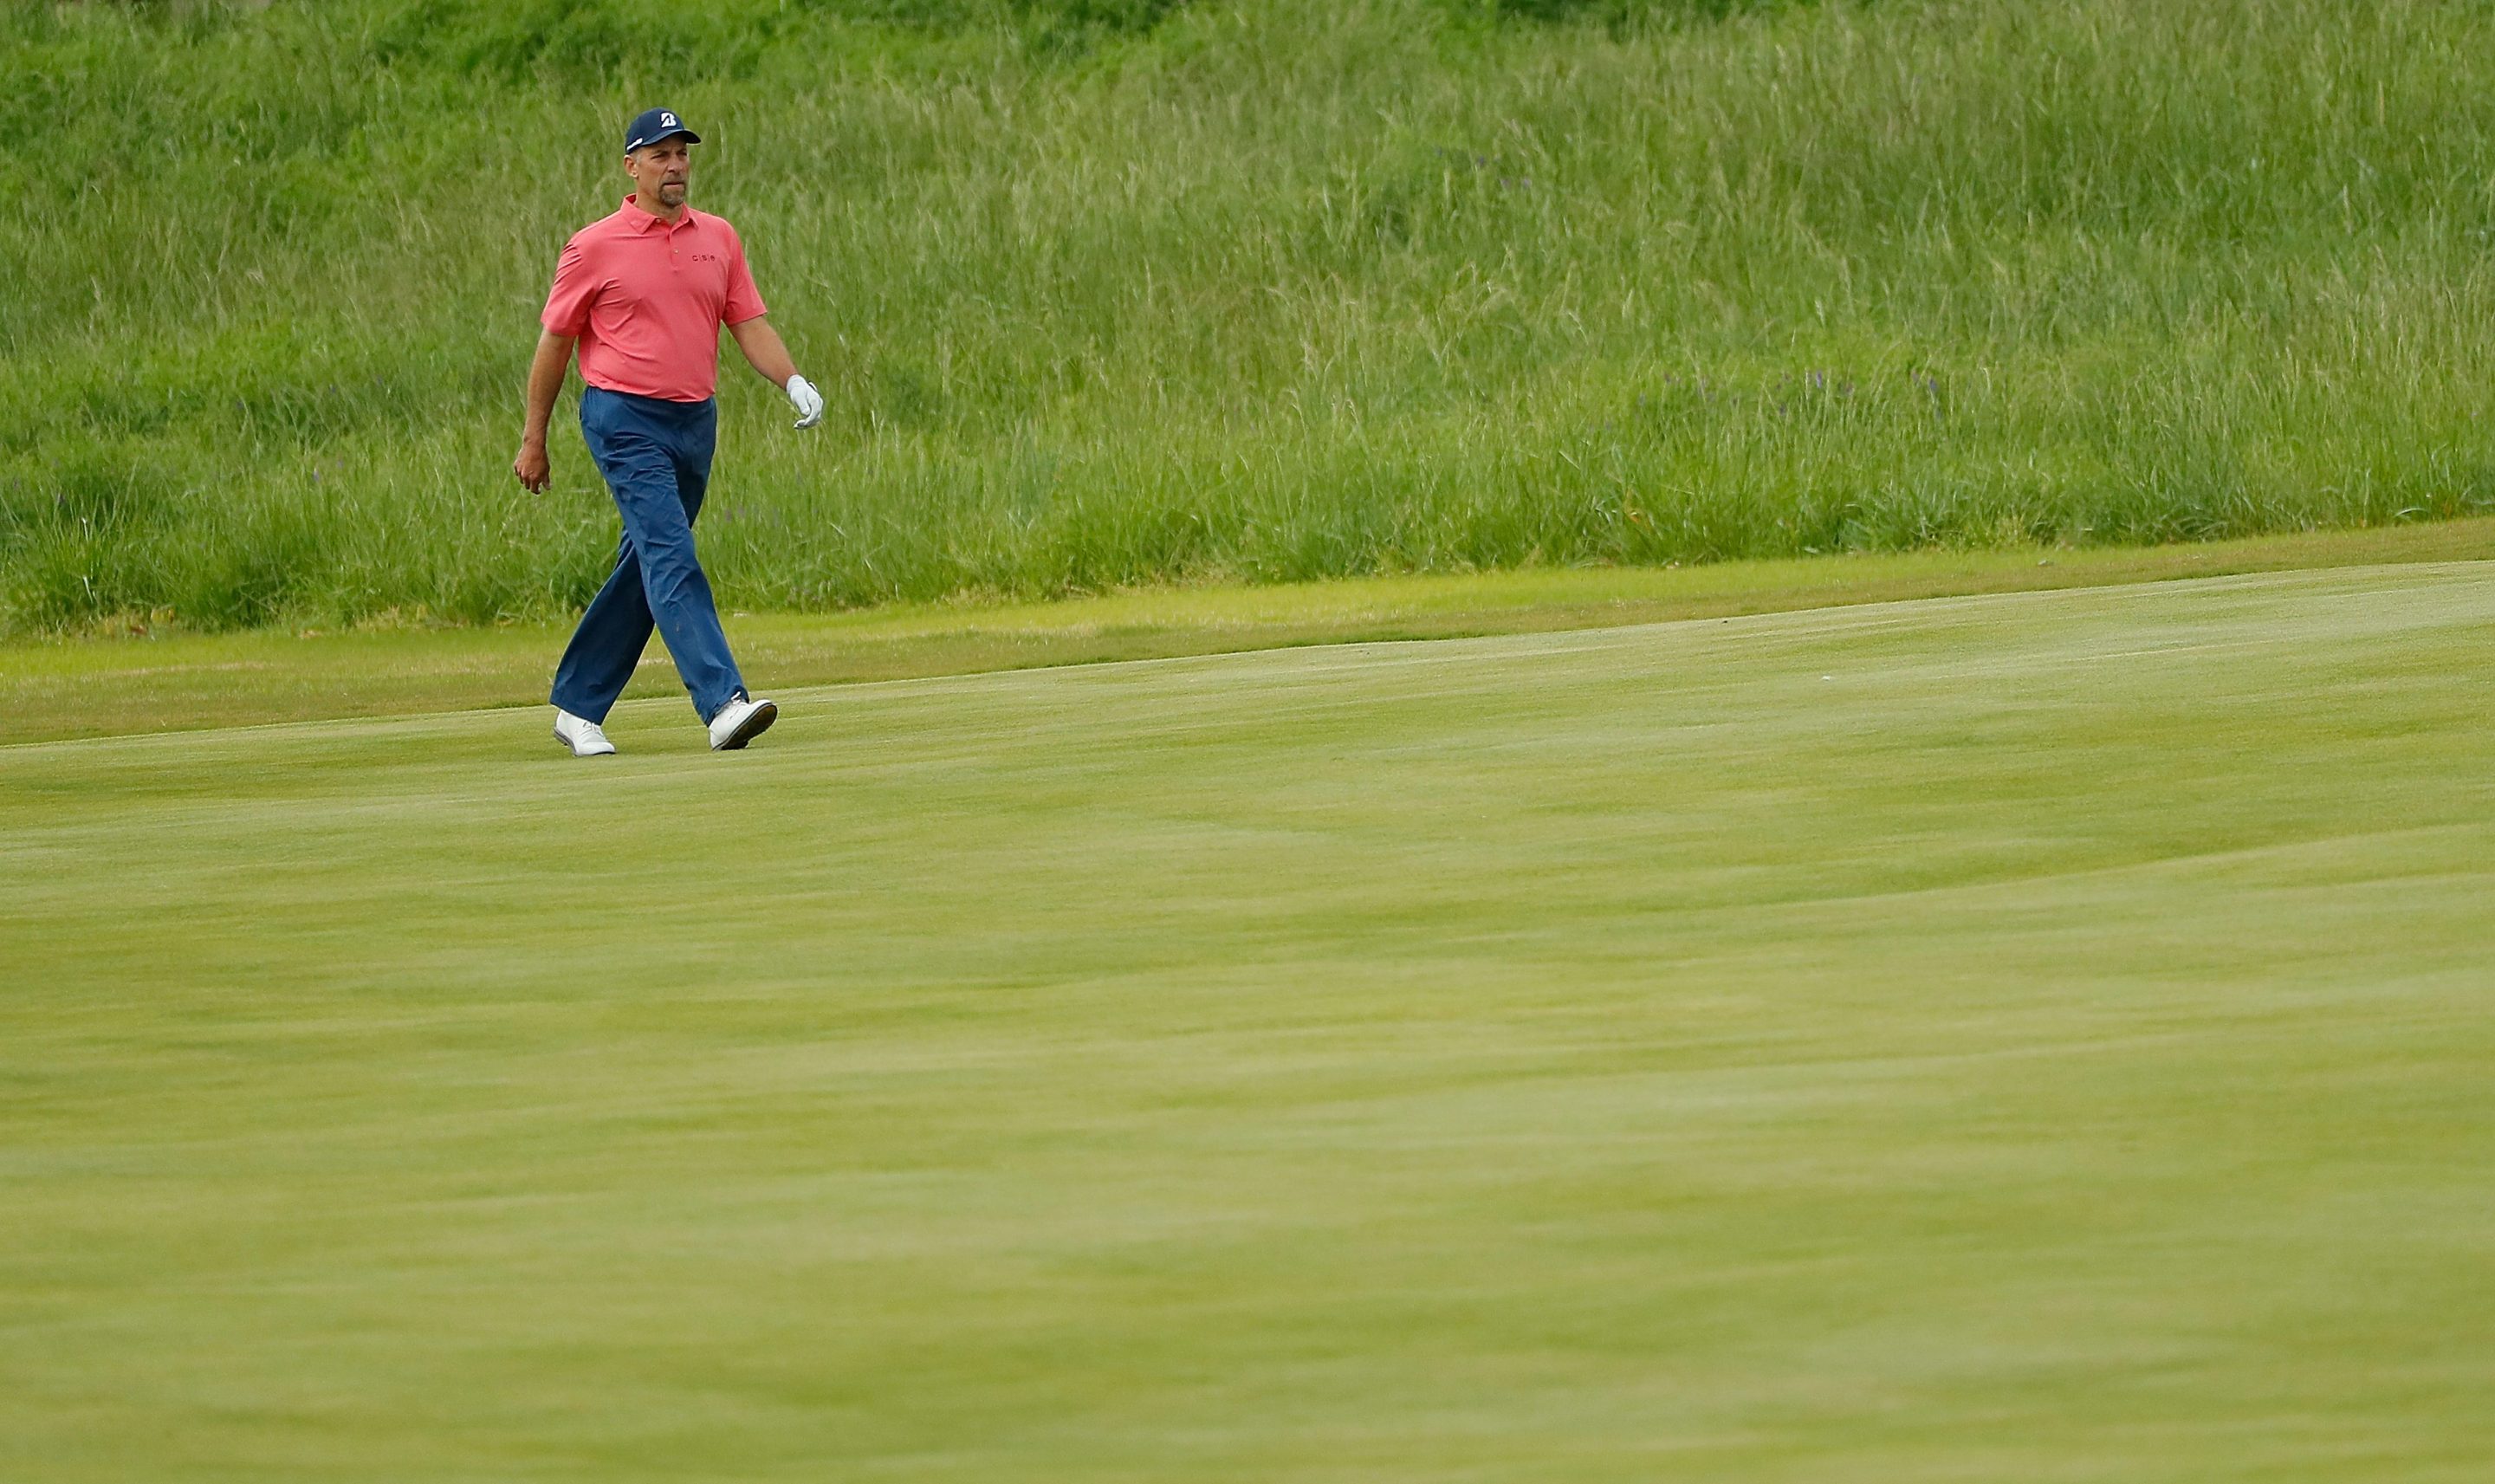 John Smoltz plays some golf.